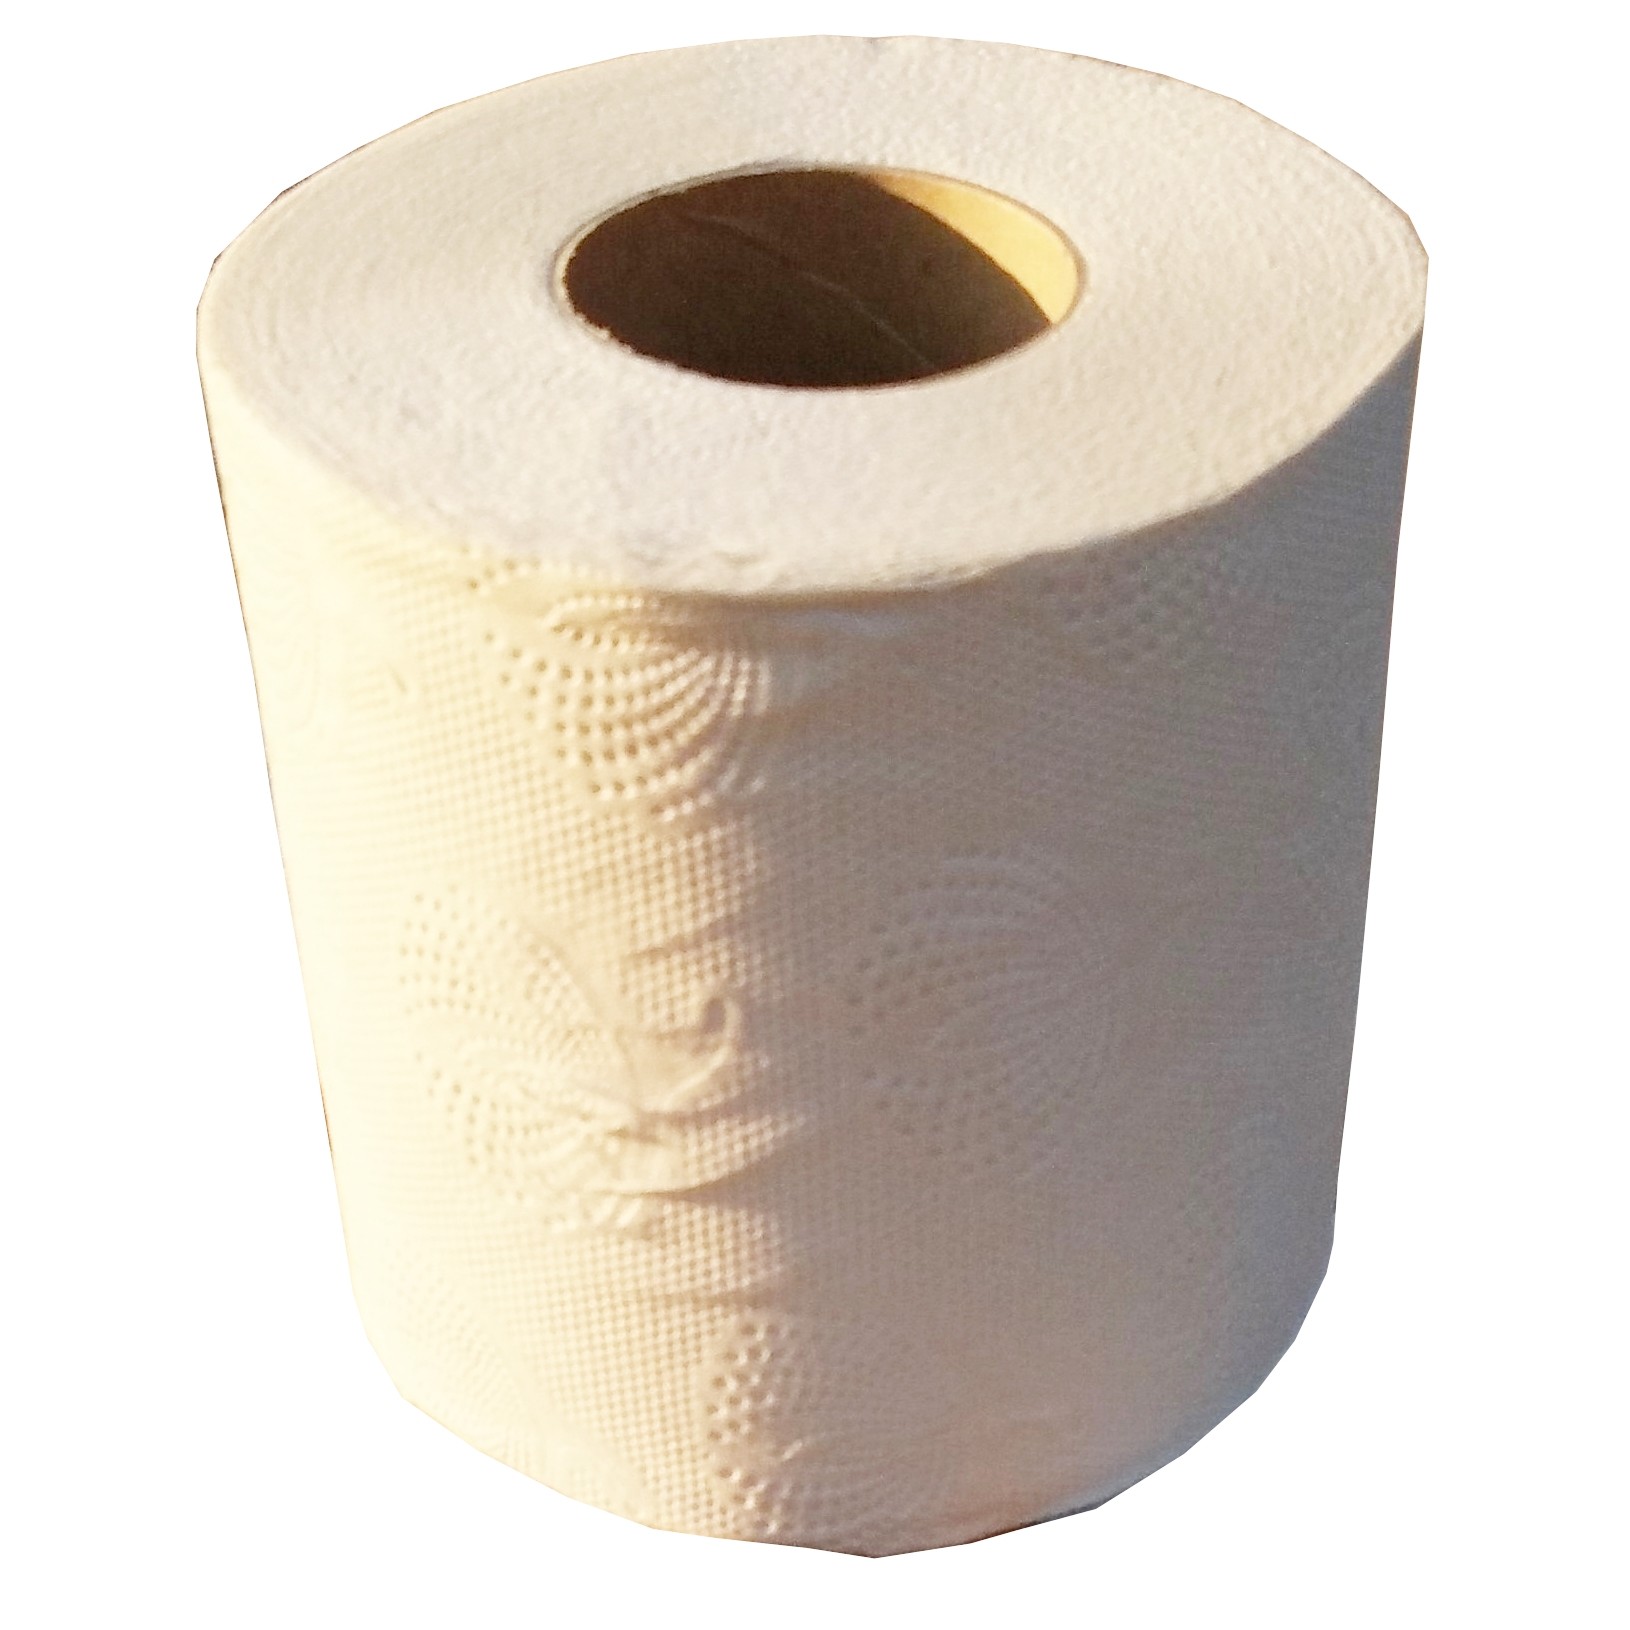 Lose Testrolle Bambus Toilettenpapier